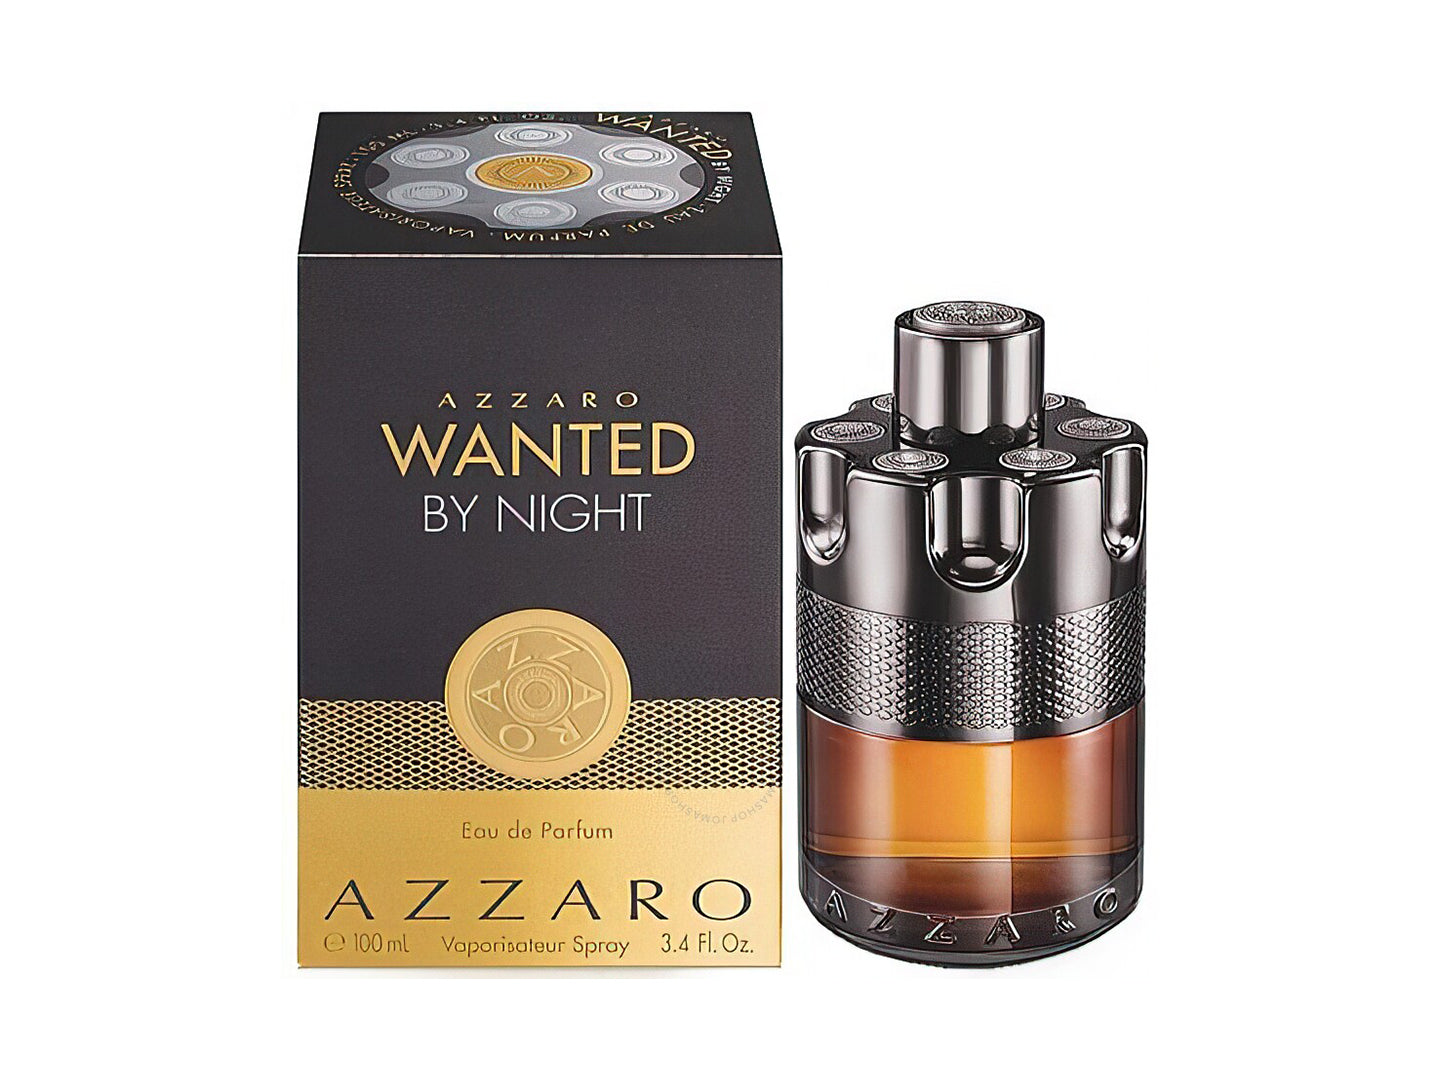 Azzaro Wanted by Night Eau de Parfum for Men - Mens Cologne 150ml